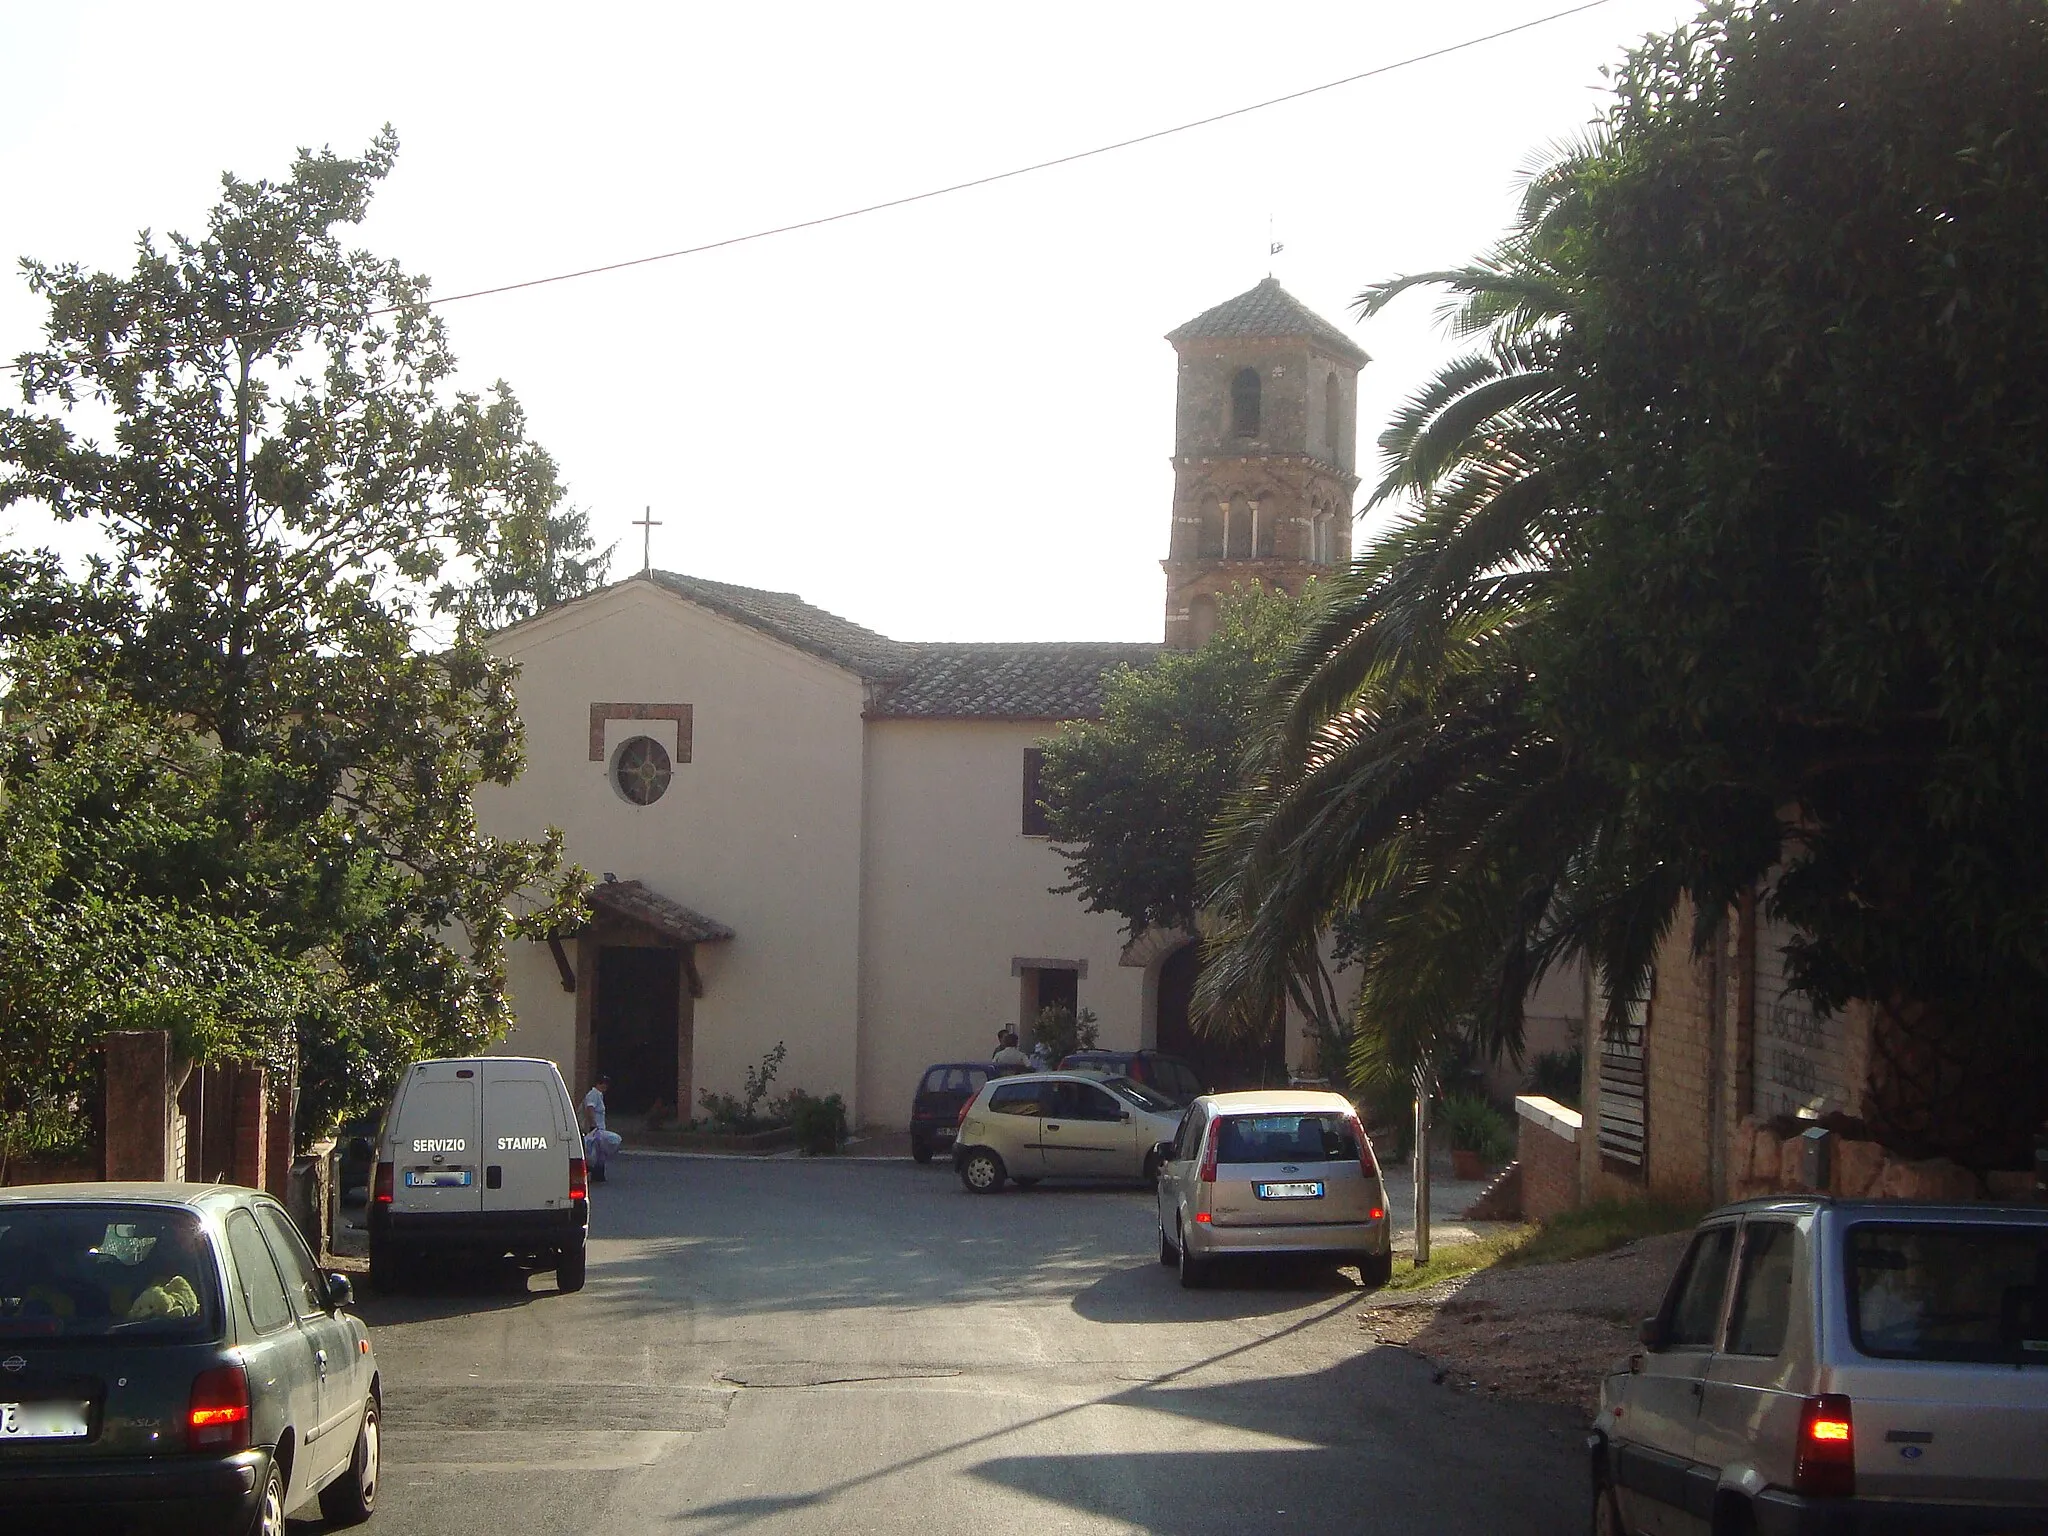 Photo showing: Facade of the church Santa Maria in Marcellina, Italy